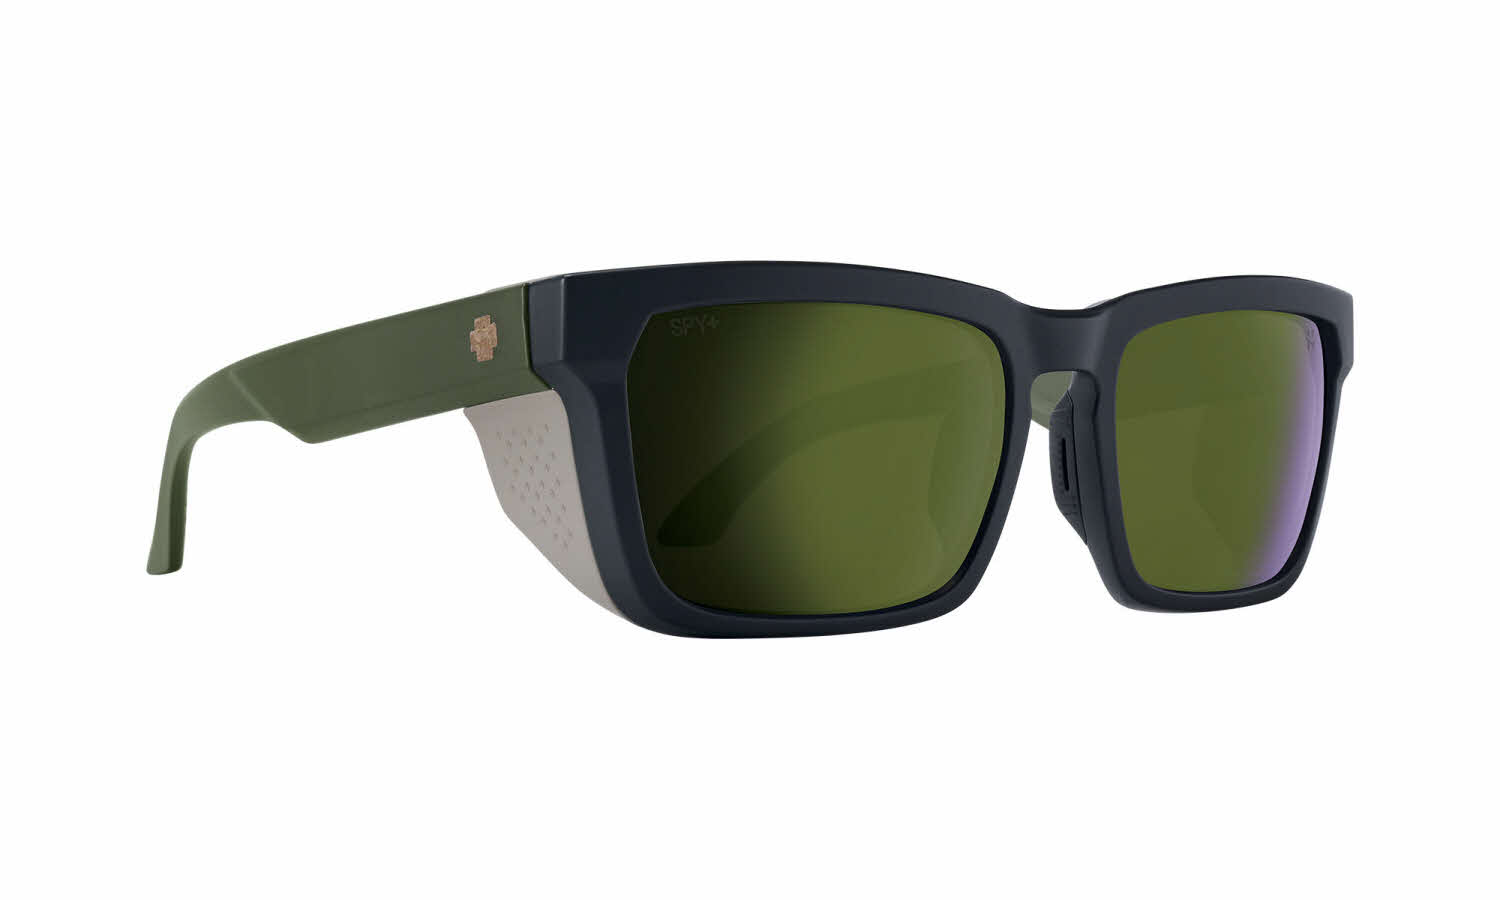 Spy Helm Tech Sunglasses